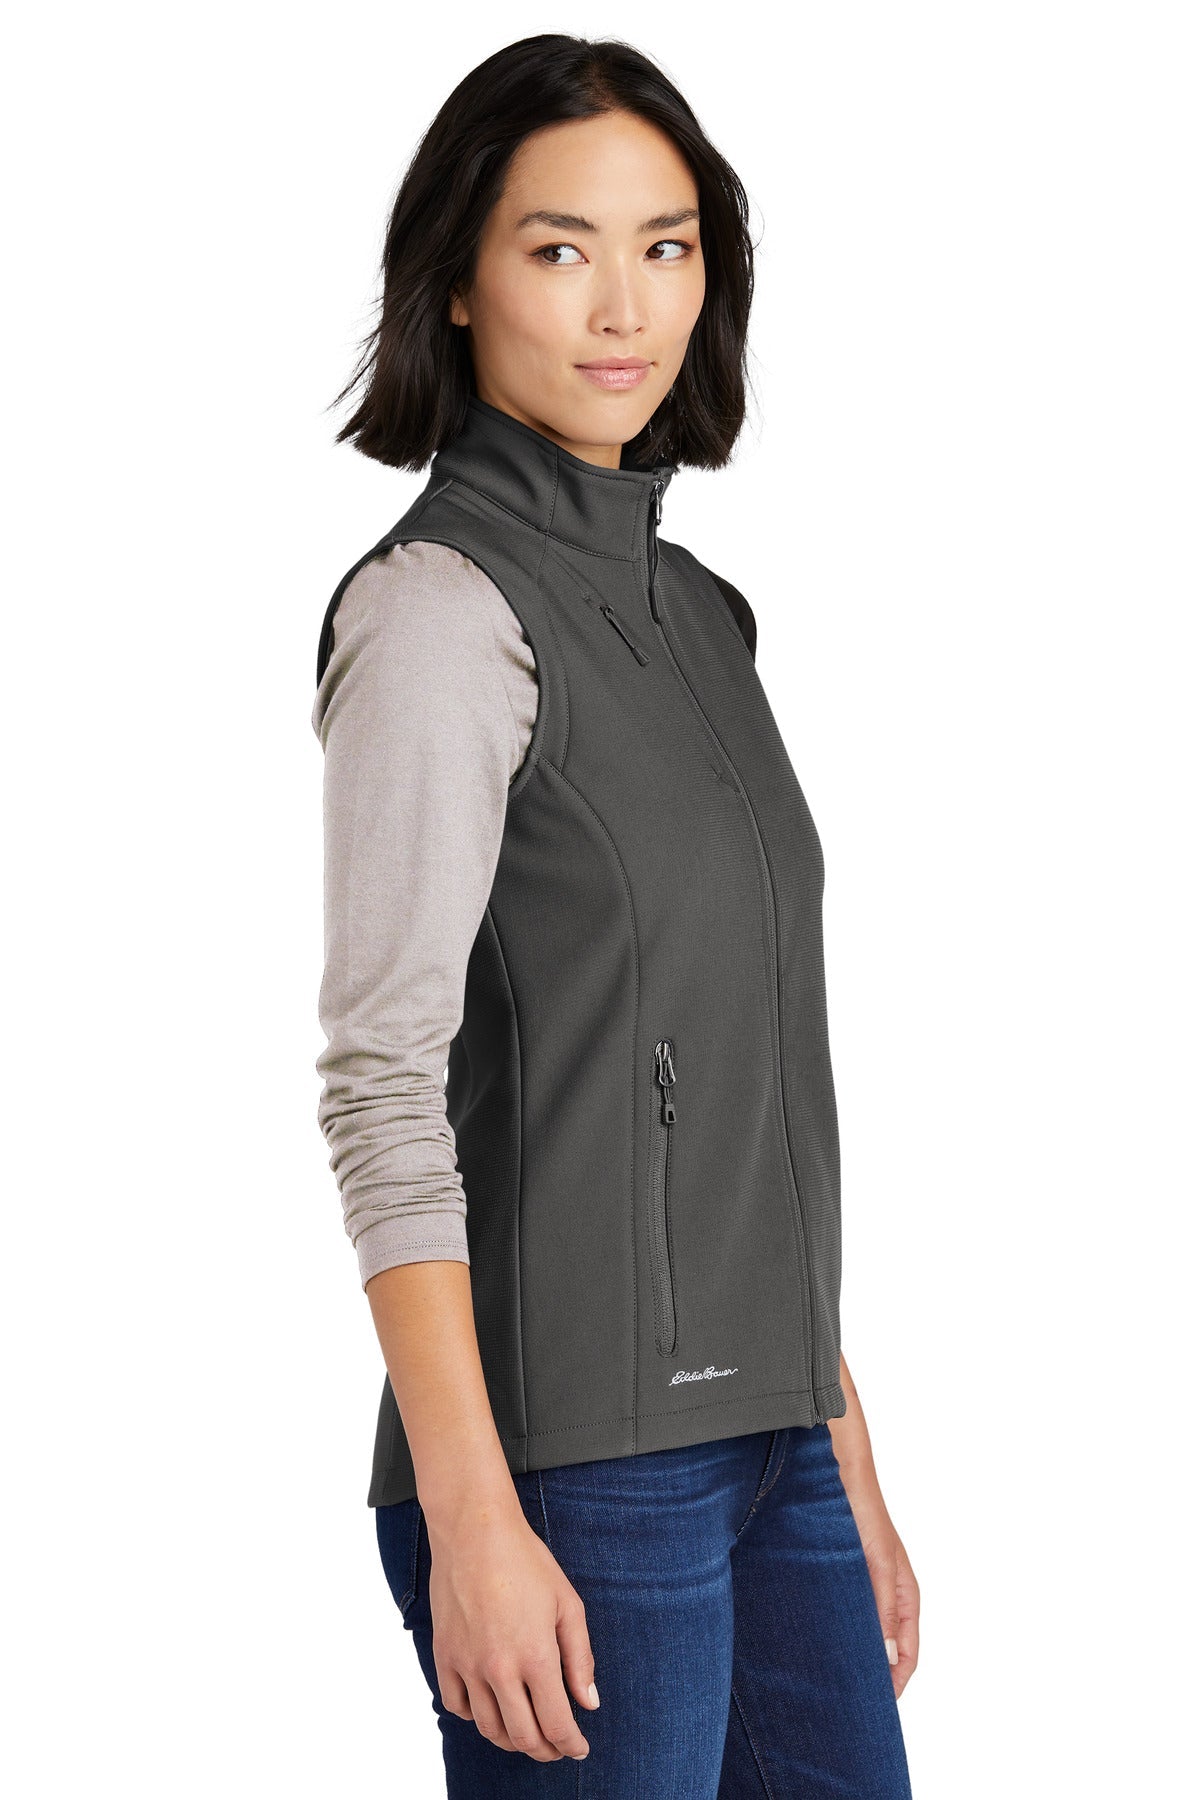 Eddie Bauer Ladies Stretch Soft Shell Vest EB547 - BT Imprintables Shirts